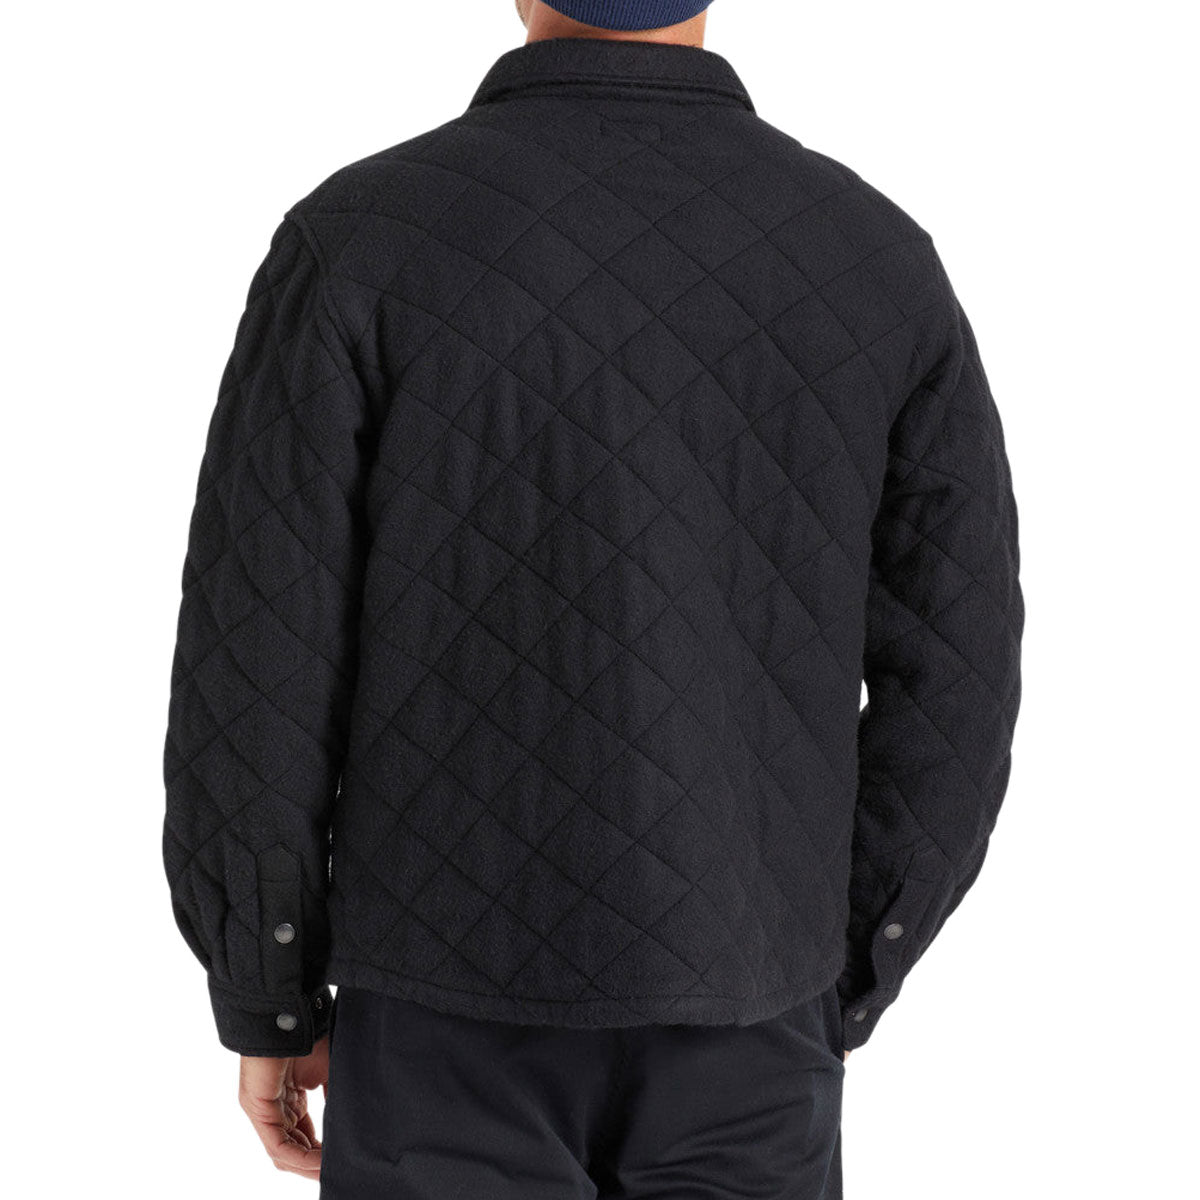 Brixton Cass Quilted Fleece Jacket - Black image 2